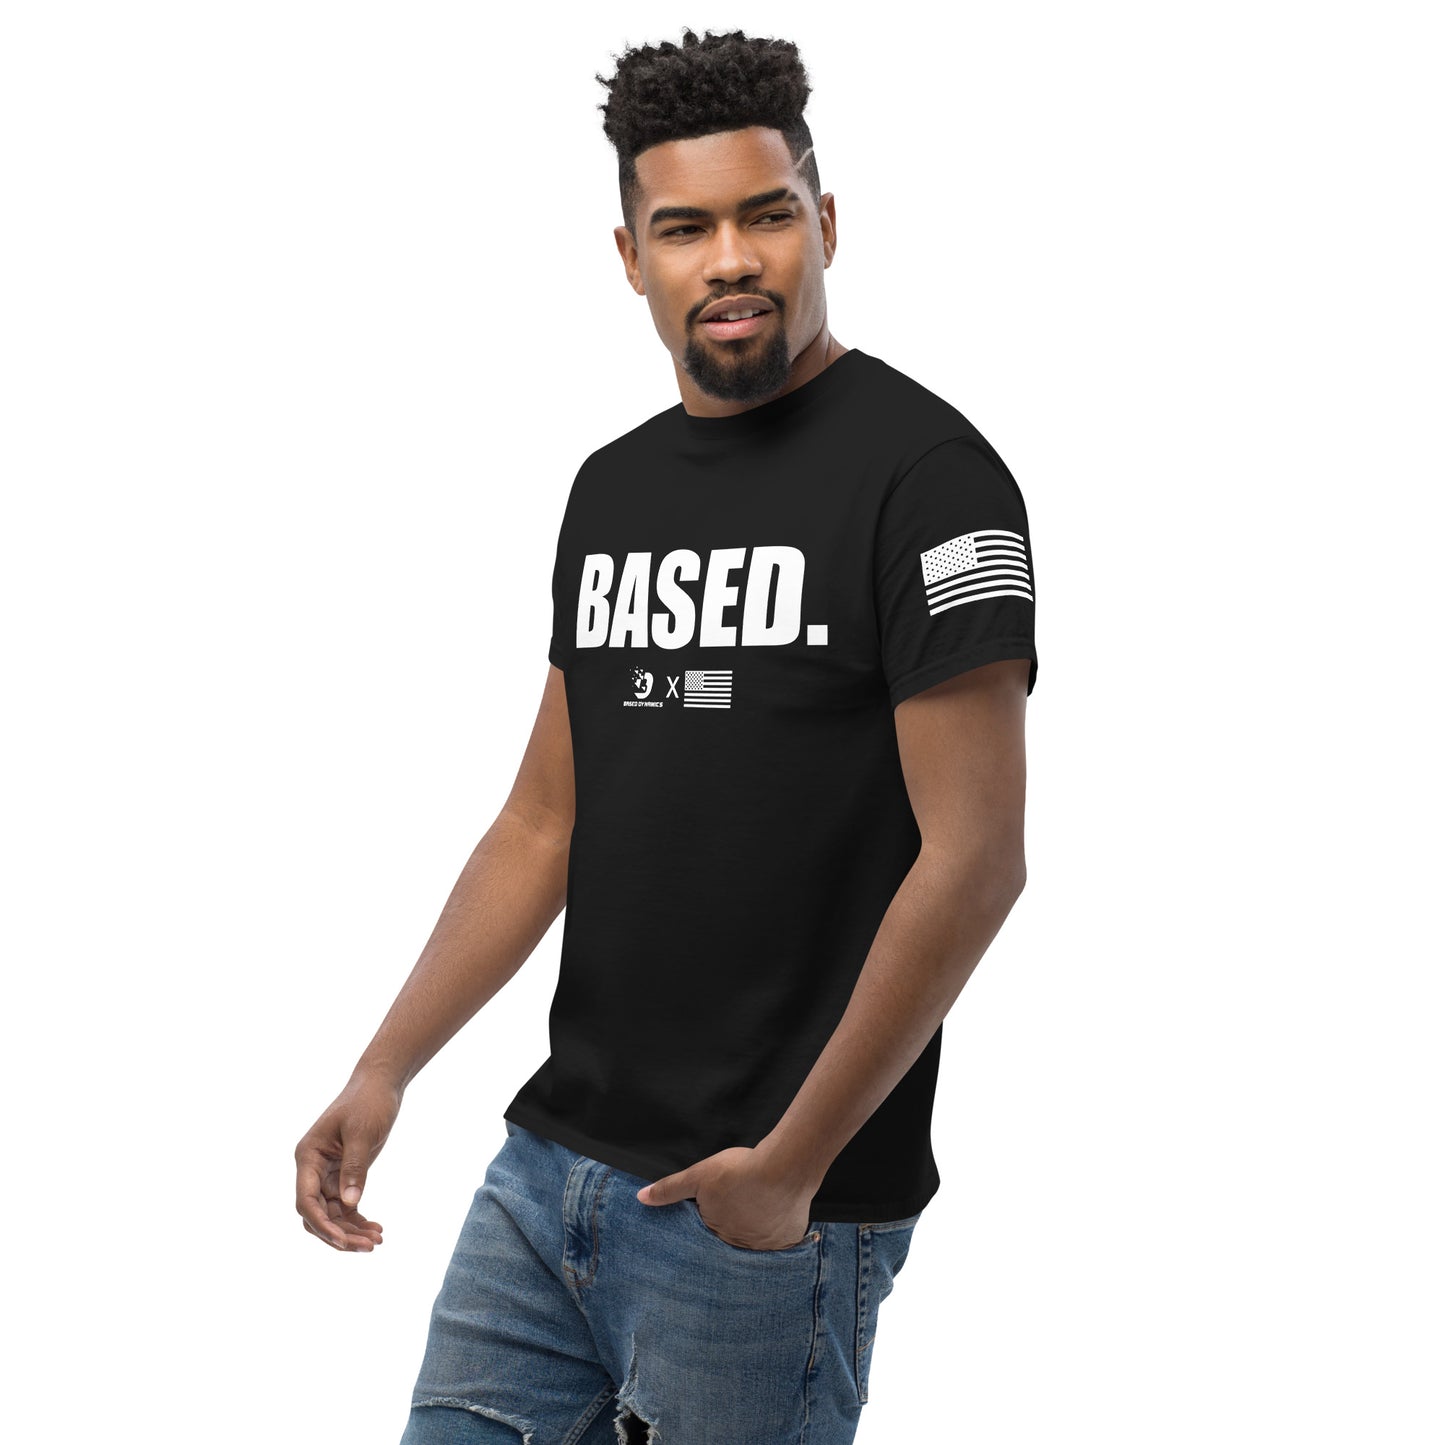 BASED T-shirt | Based Dynamics